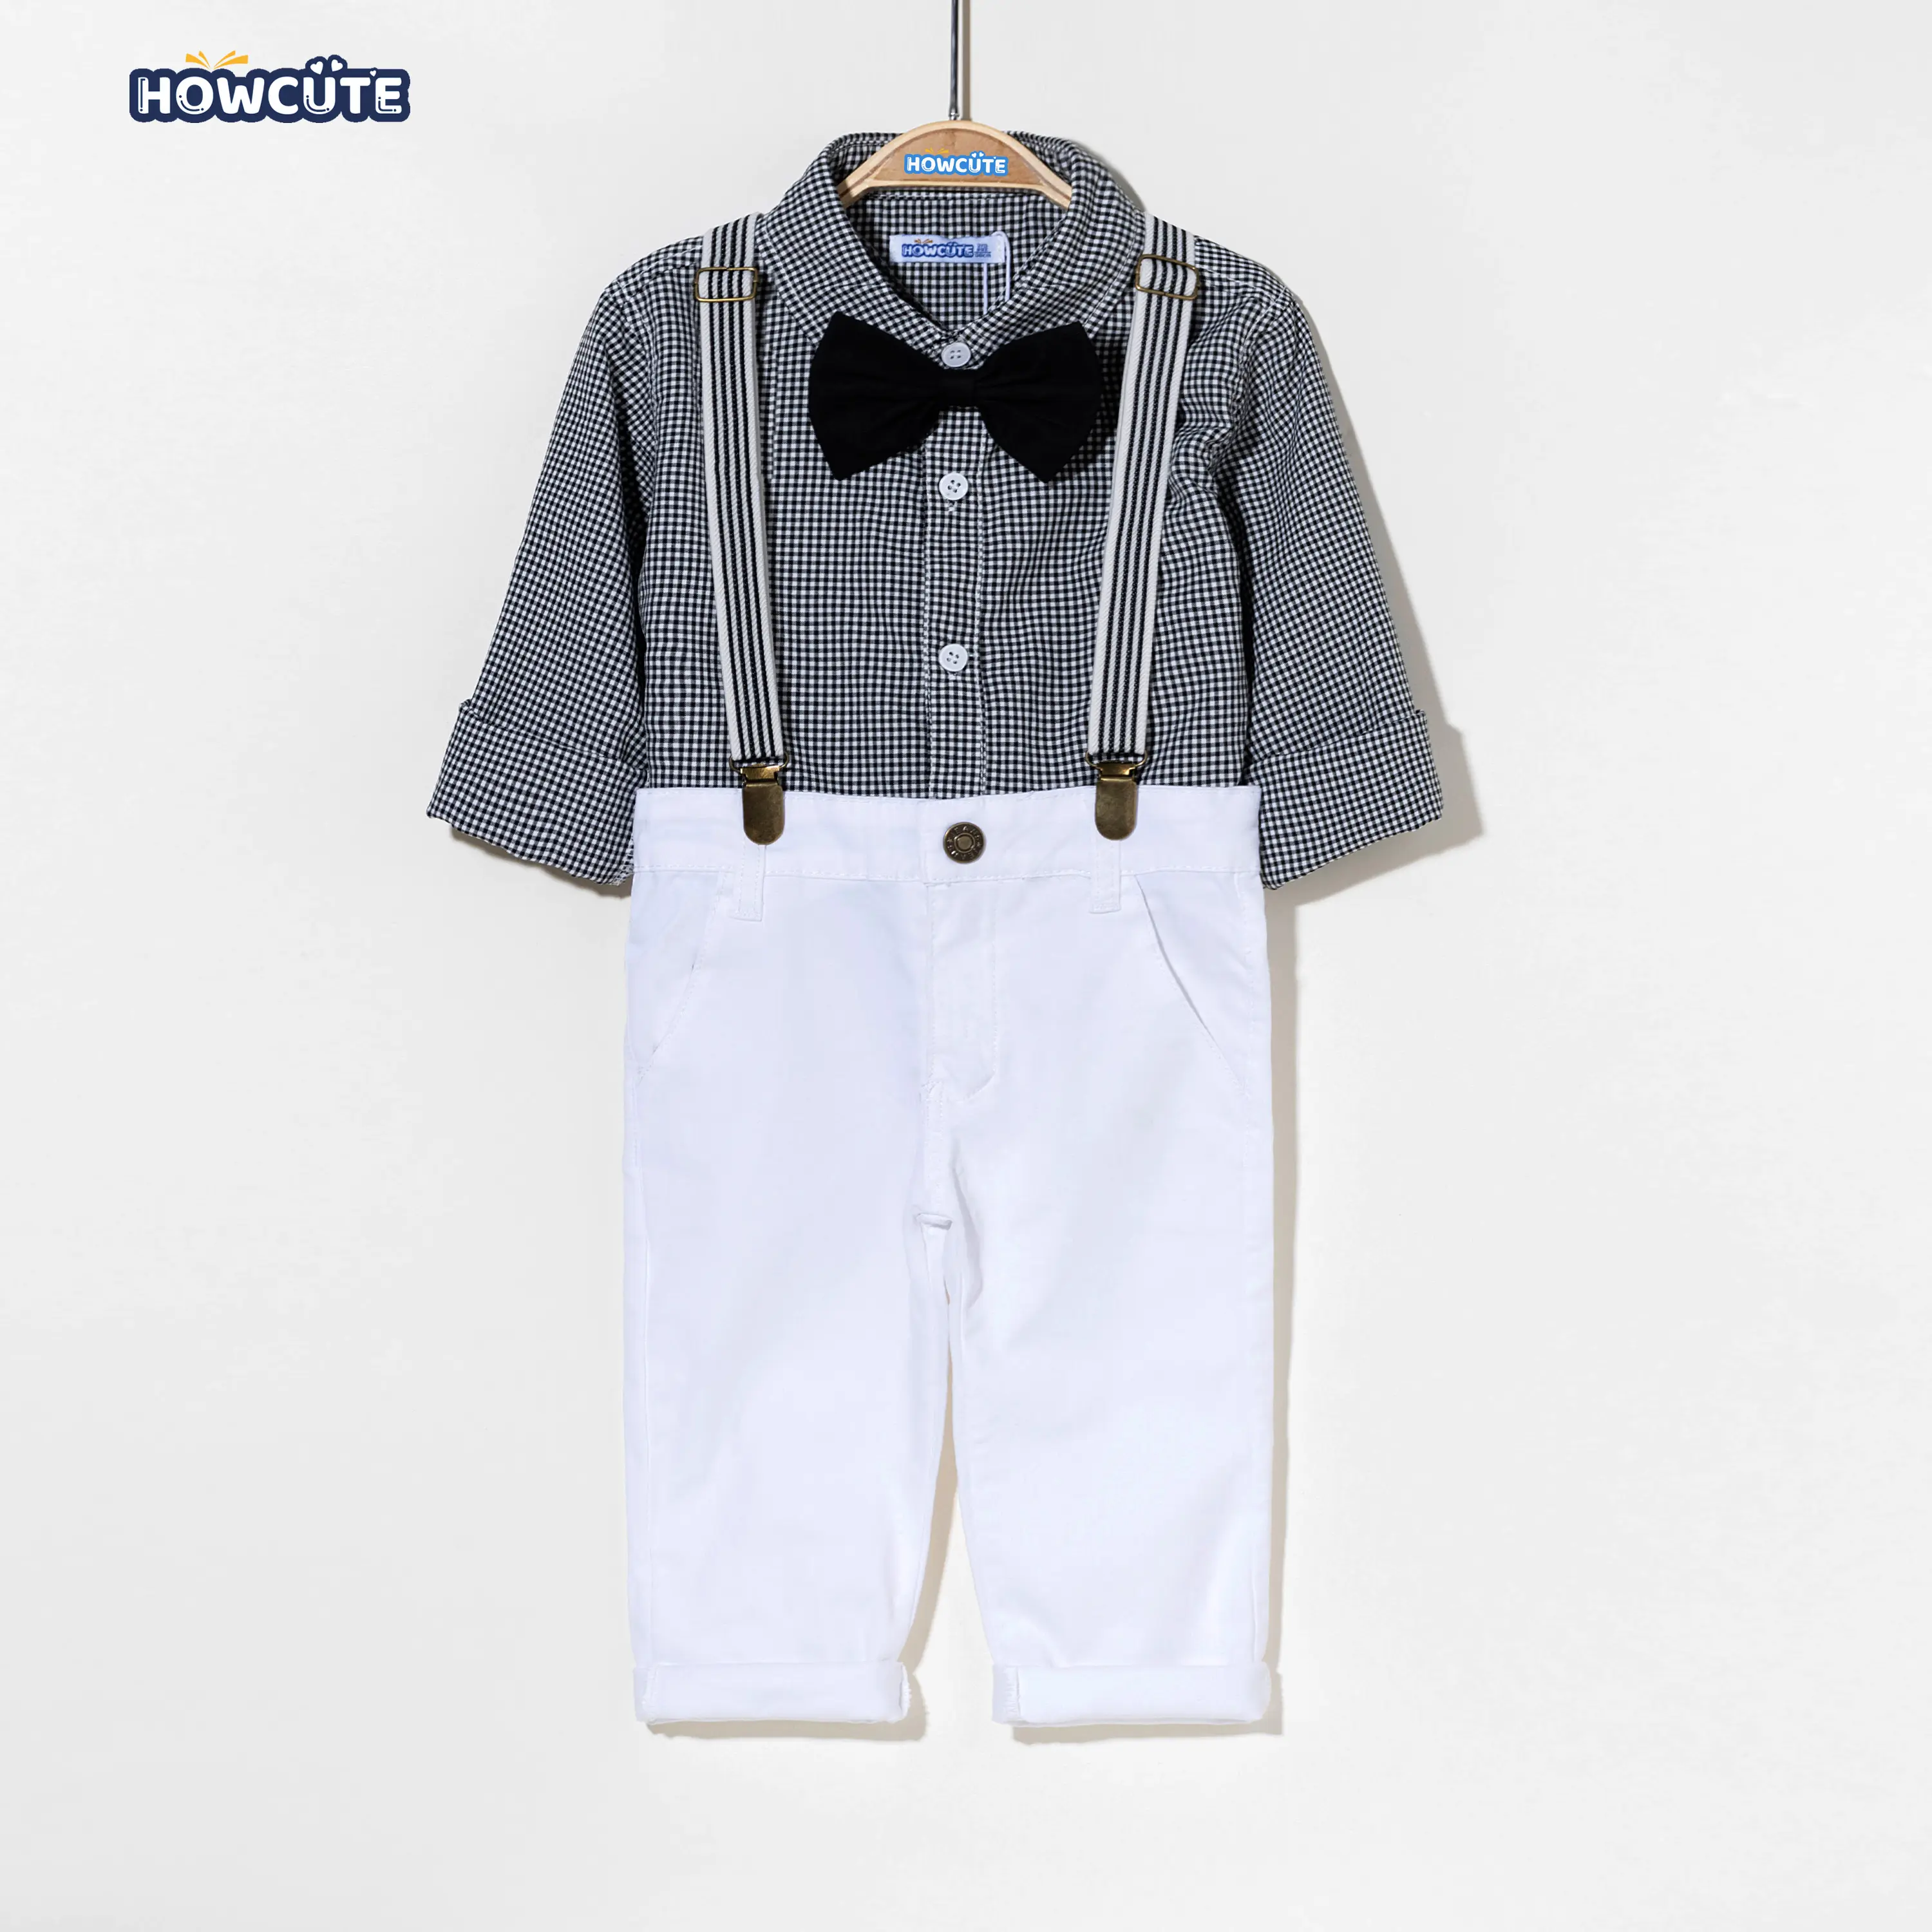 बच्चे लड़कों औपचारिक सूट सेट छोटे लड़के औपचारिक सूट शर्ट + पंत + धनुष टाई शिशु सज्जन सूट सेट